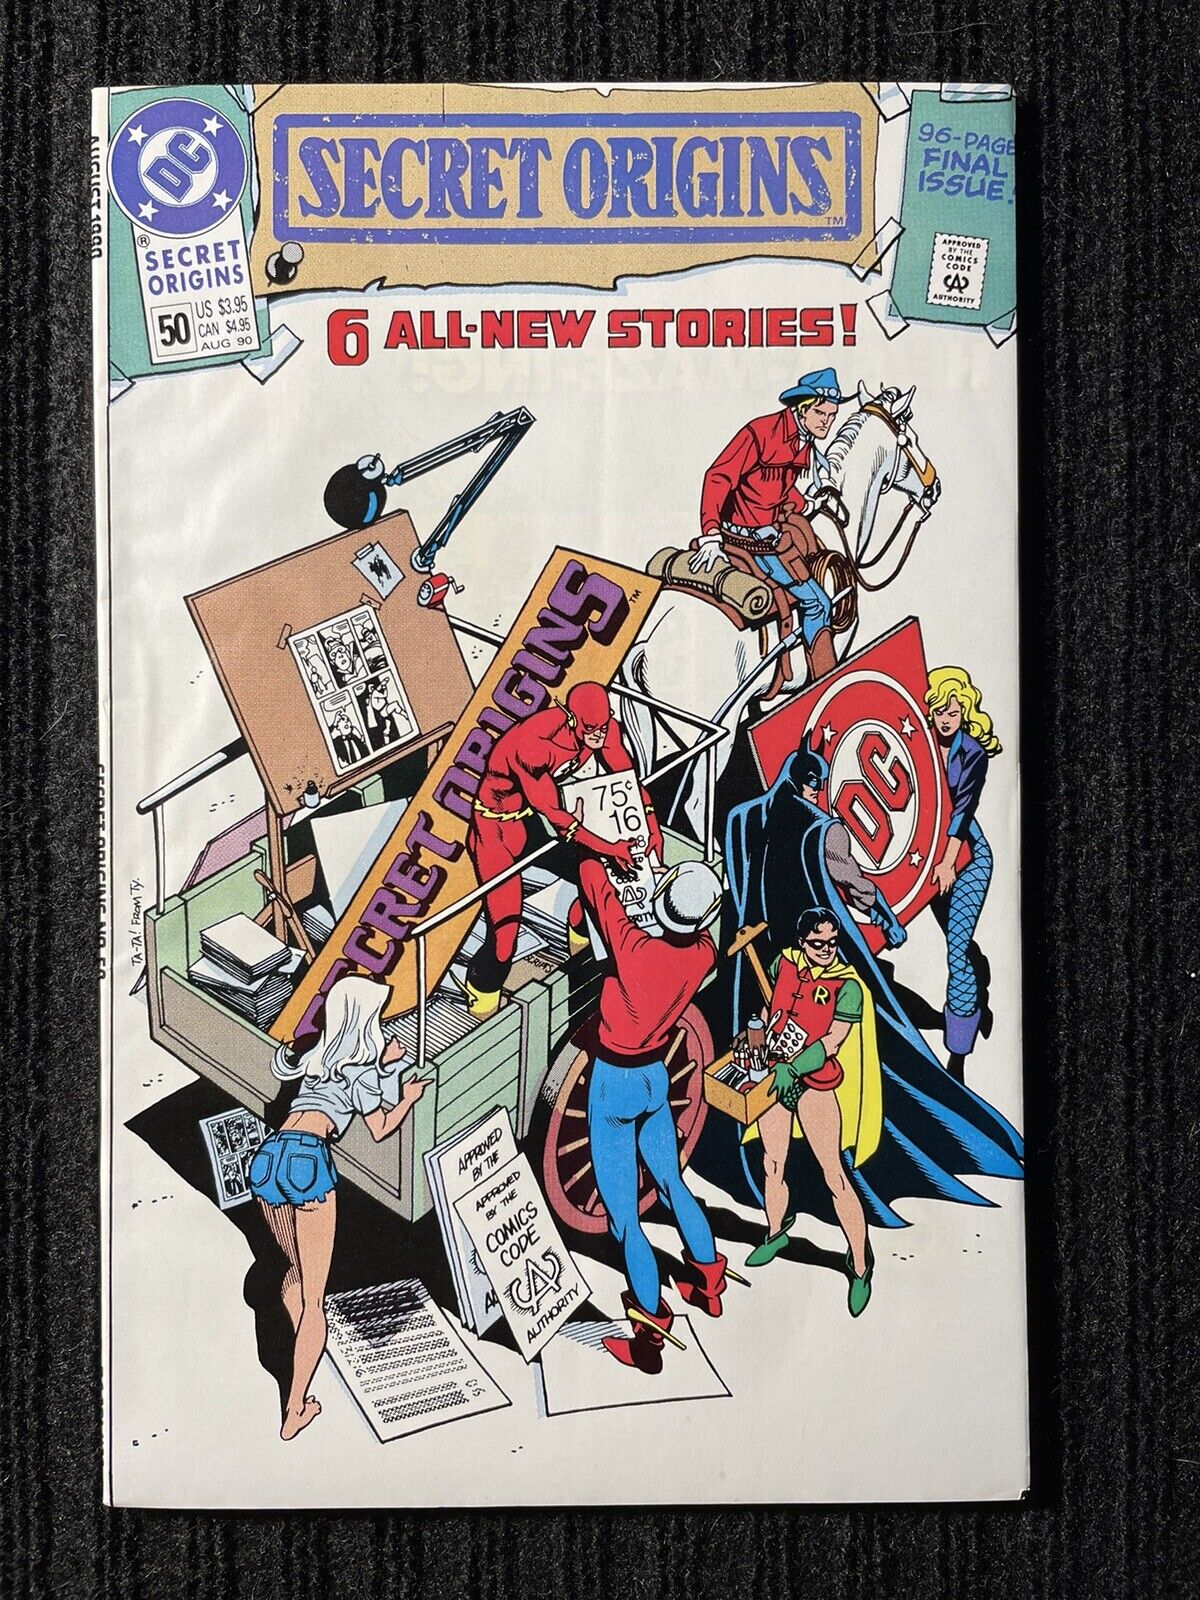 DC Secret Origins #50. 96pg Final Issue George Perez 1990